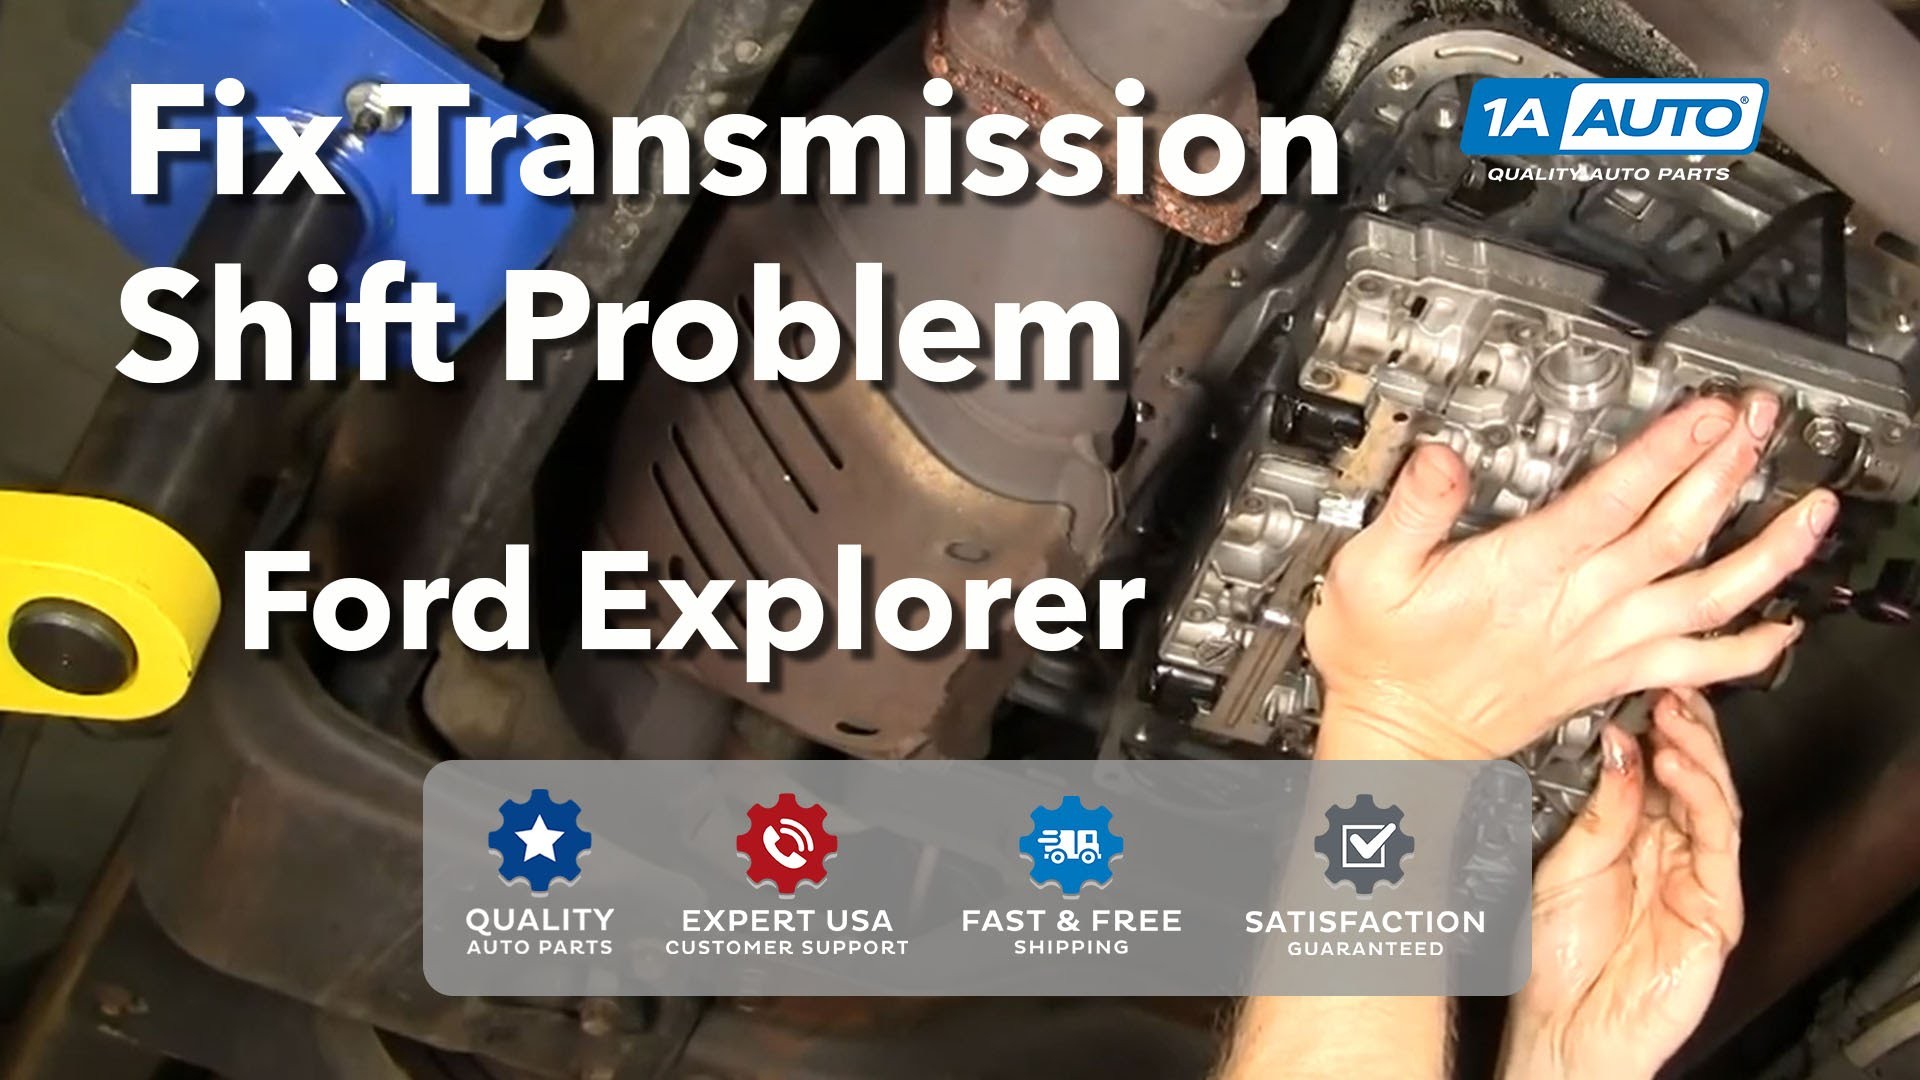 2004 ford Explorer Engine Diagram Auto Repair Fix Transmission Shift Problem ford 5r55e Explorer Buy Of 2004 ford Explorer Engine Diagram